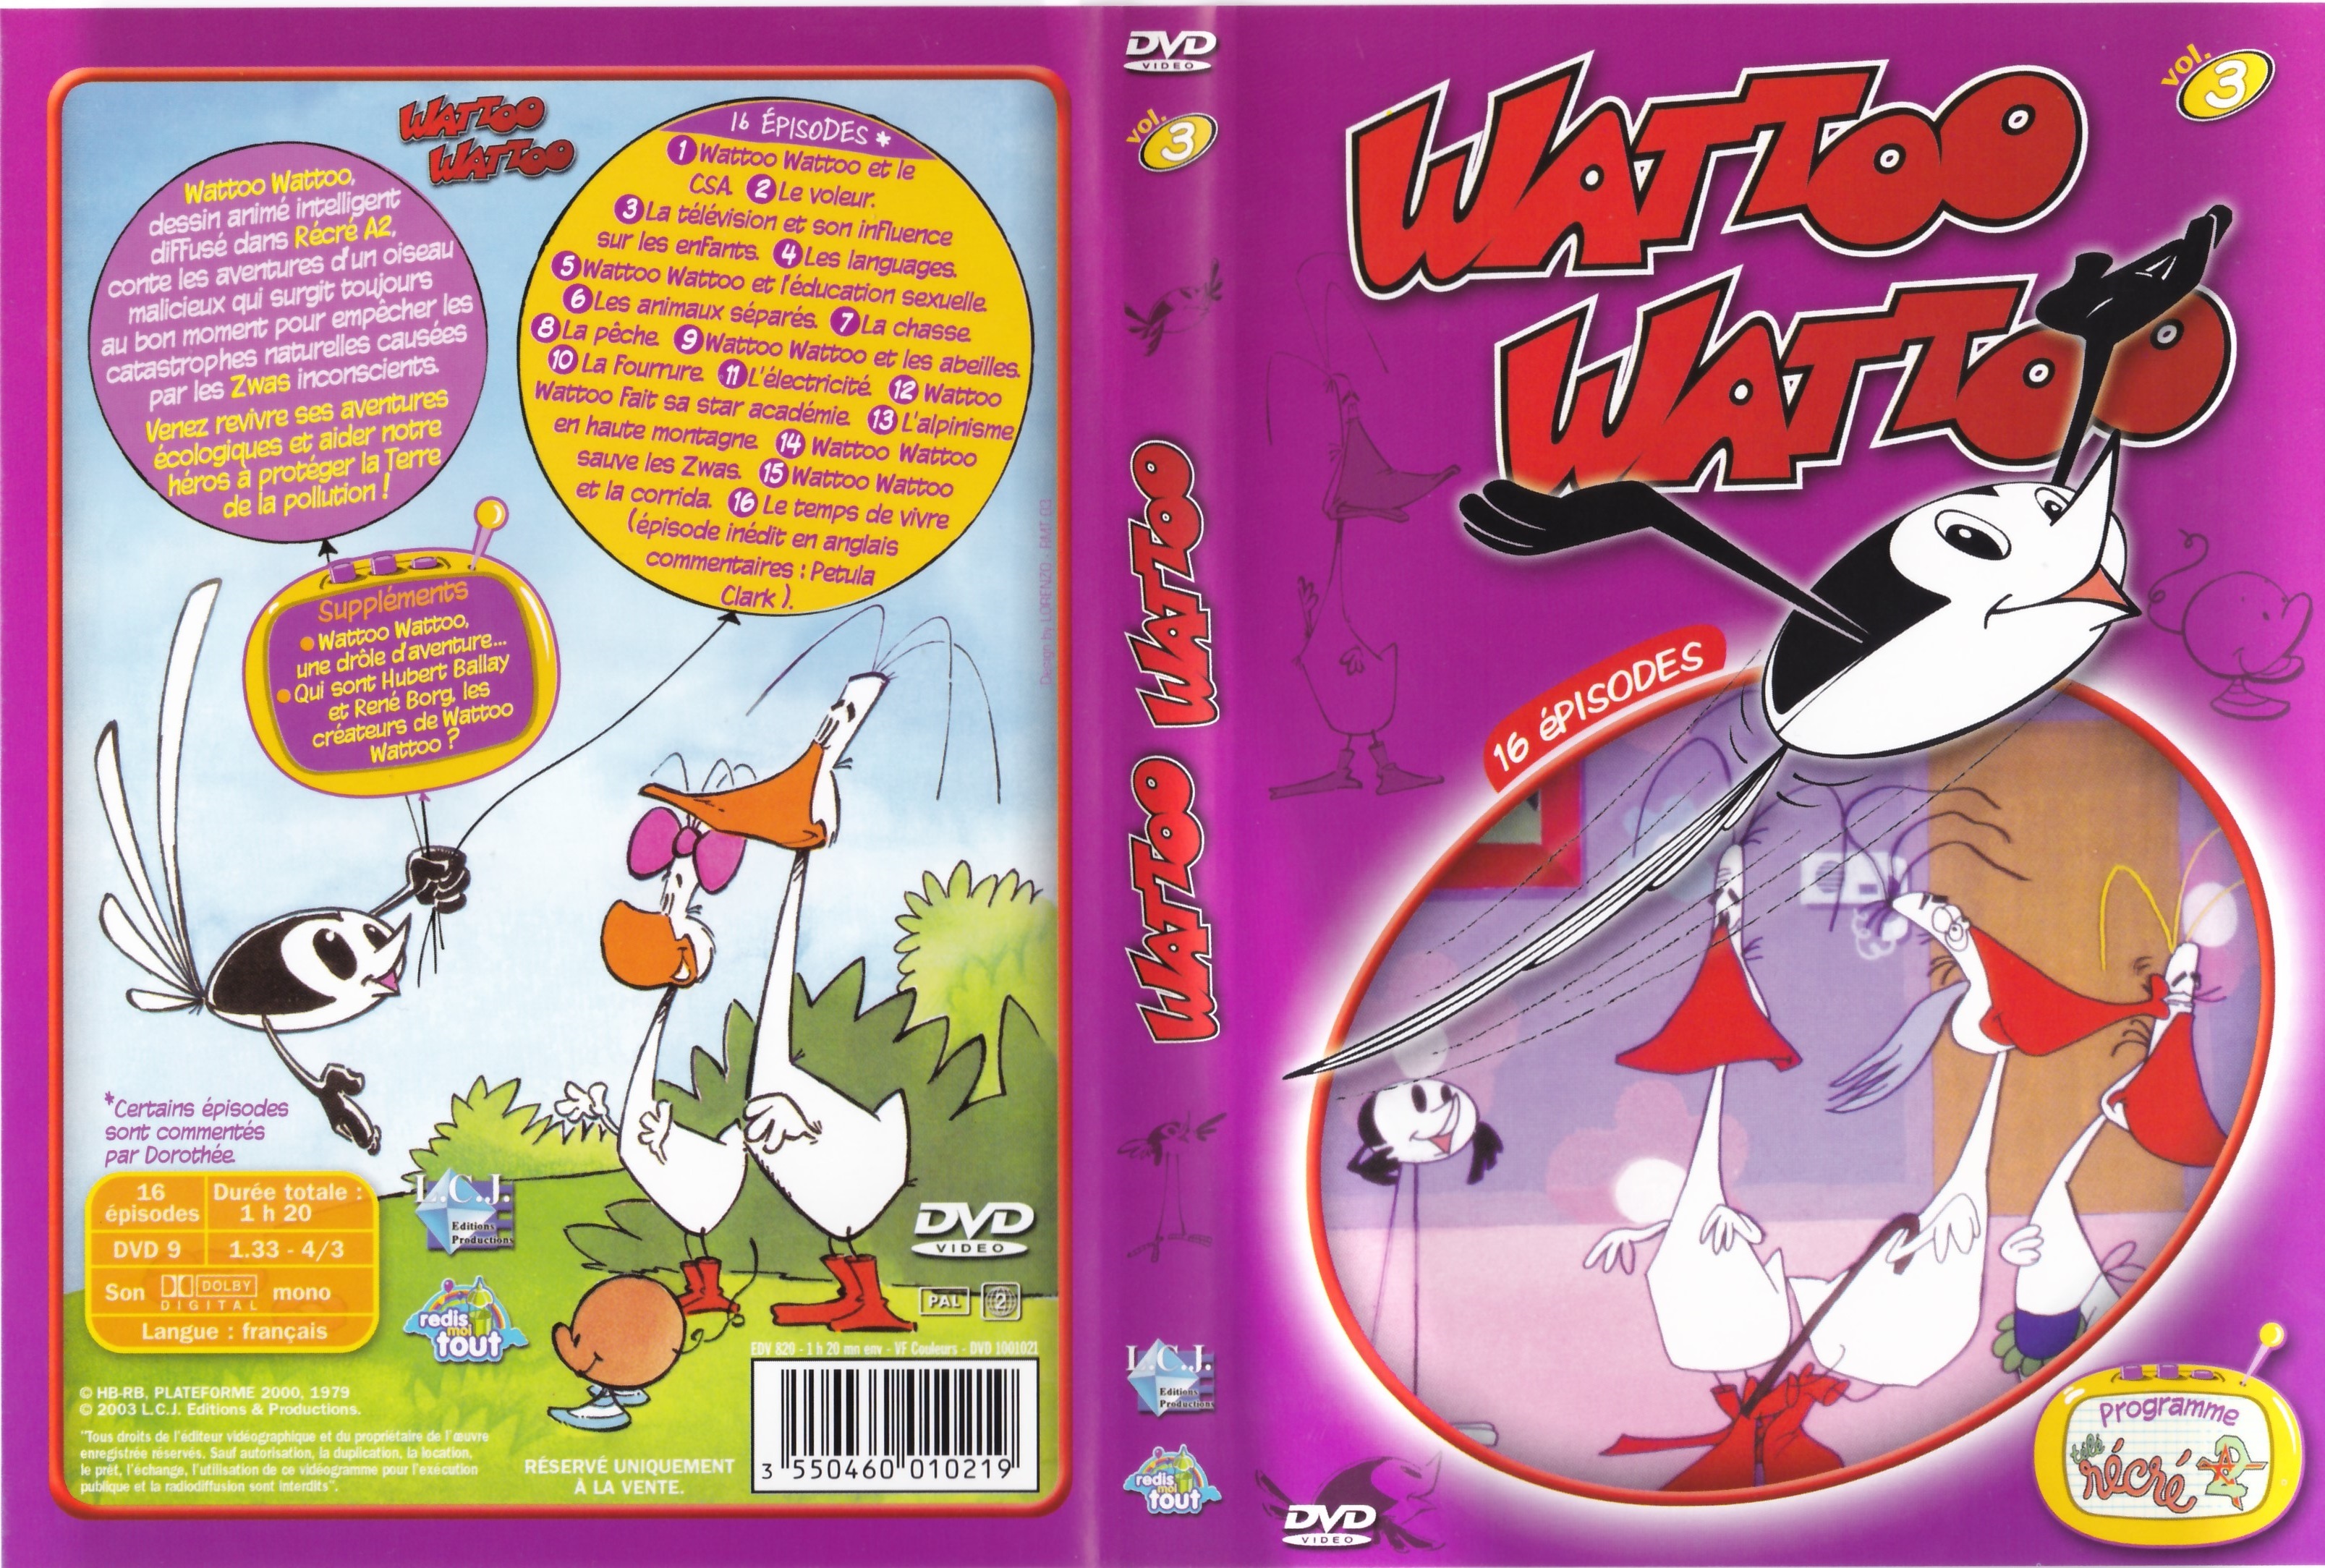 Jaquette DVD Wattoo Wattoo vol 3